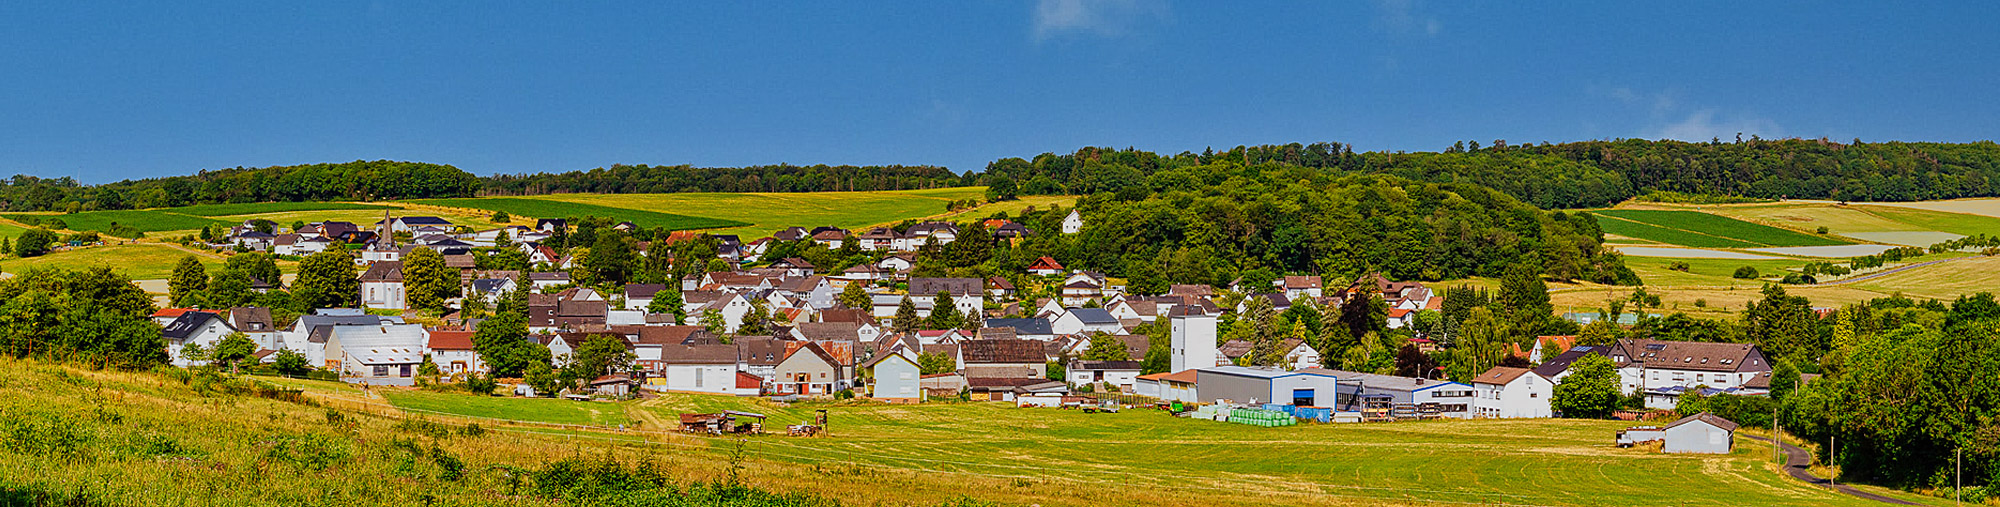 Neunkirchen Westerwald 